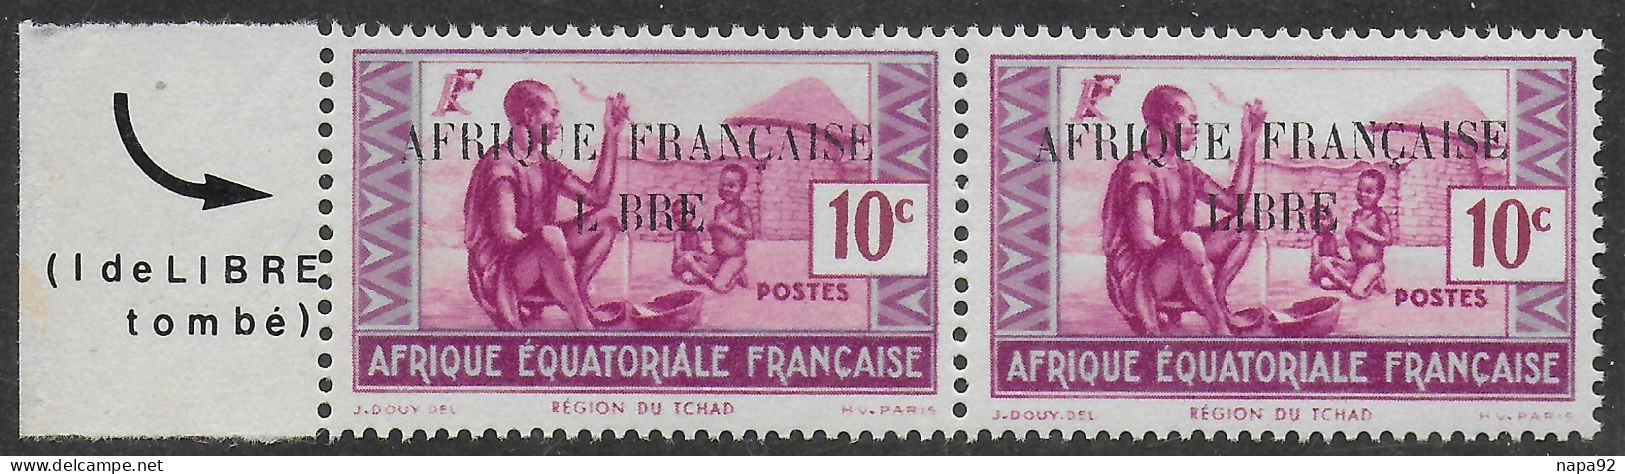 AFRIQUE EQUATORIALE FRANCAISE - AEF - A.E.F. - 1940 - YT 96** - VARIETE - Ongebruikt